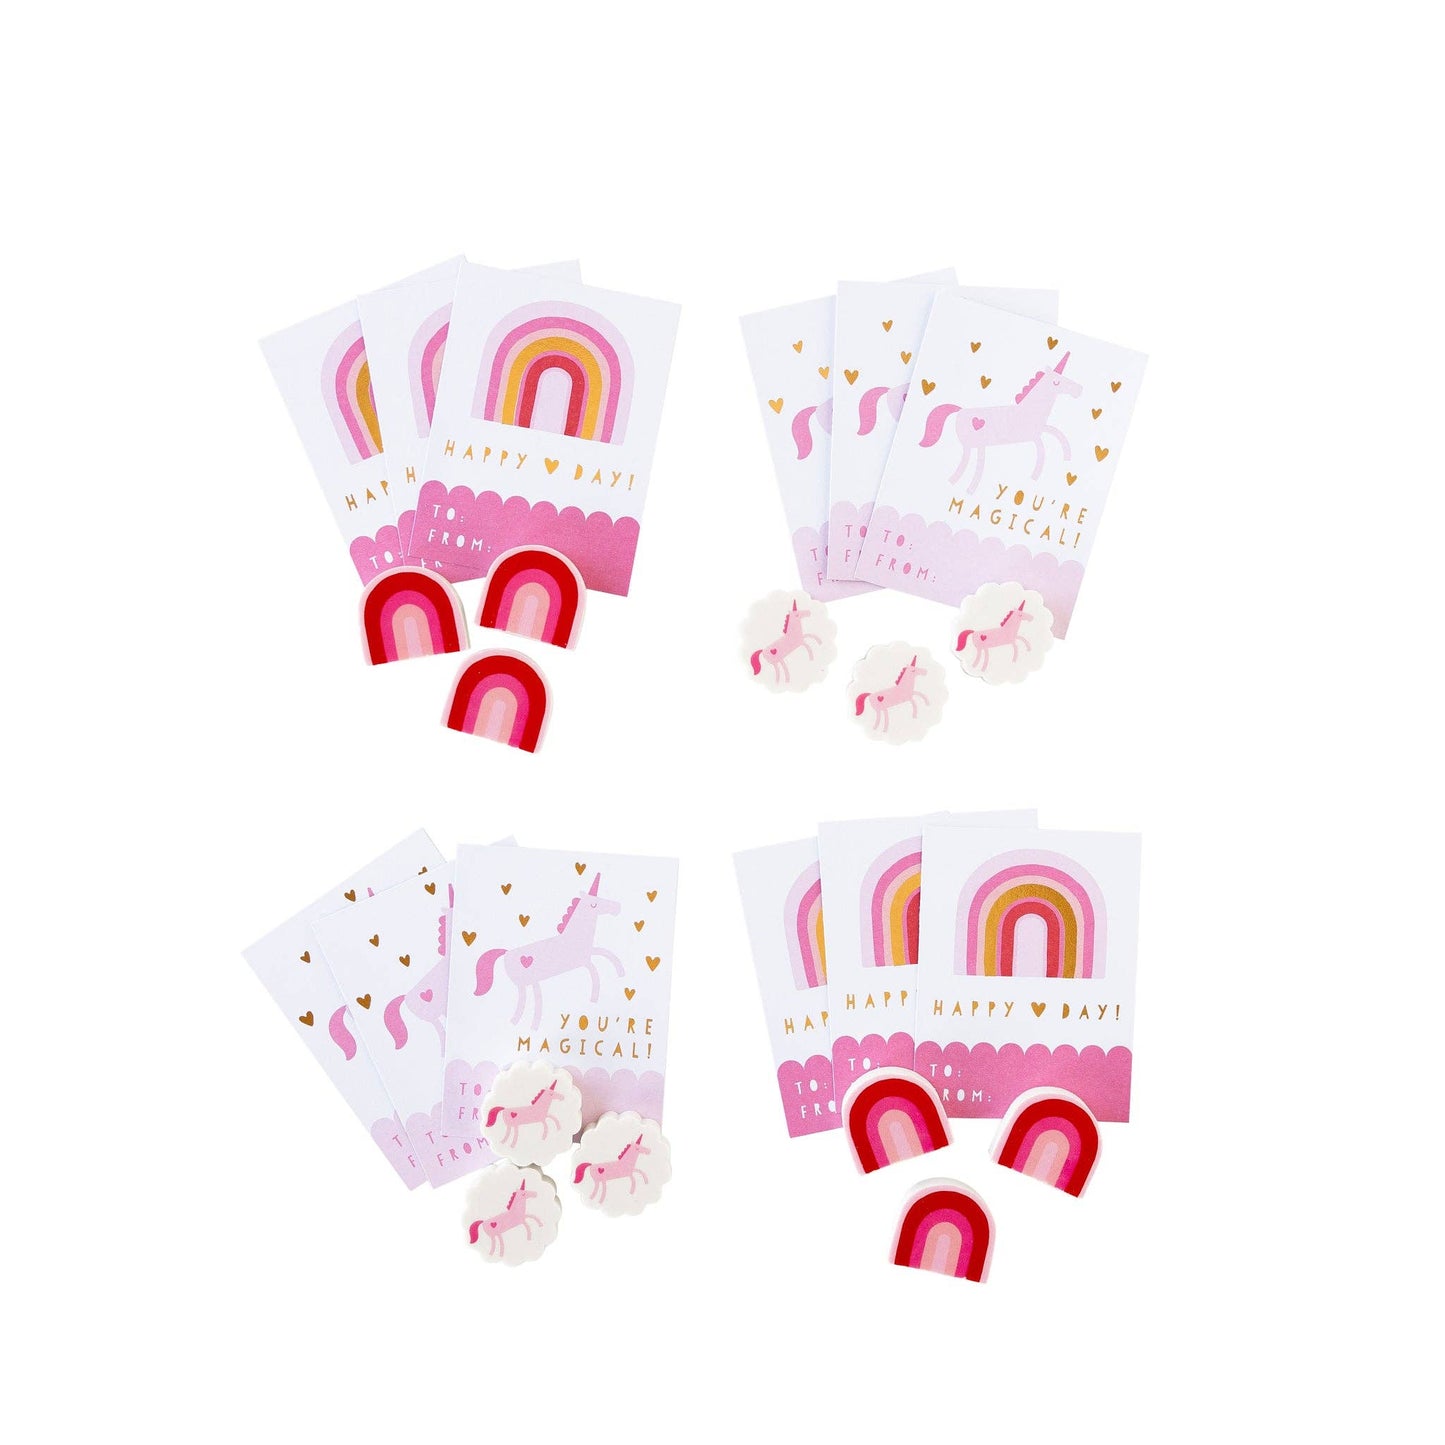 PLKC36 -  Rainbows and Unicorns Valentine's Cards